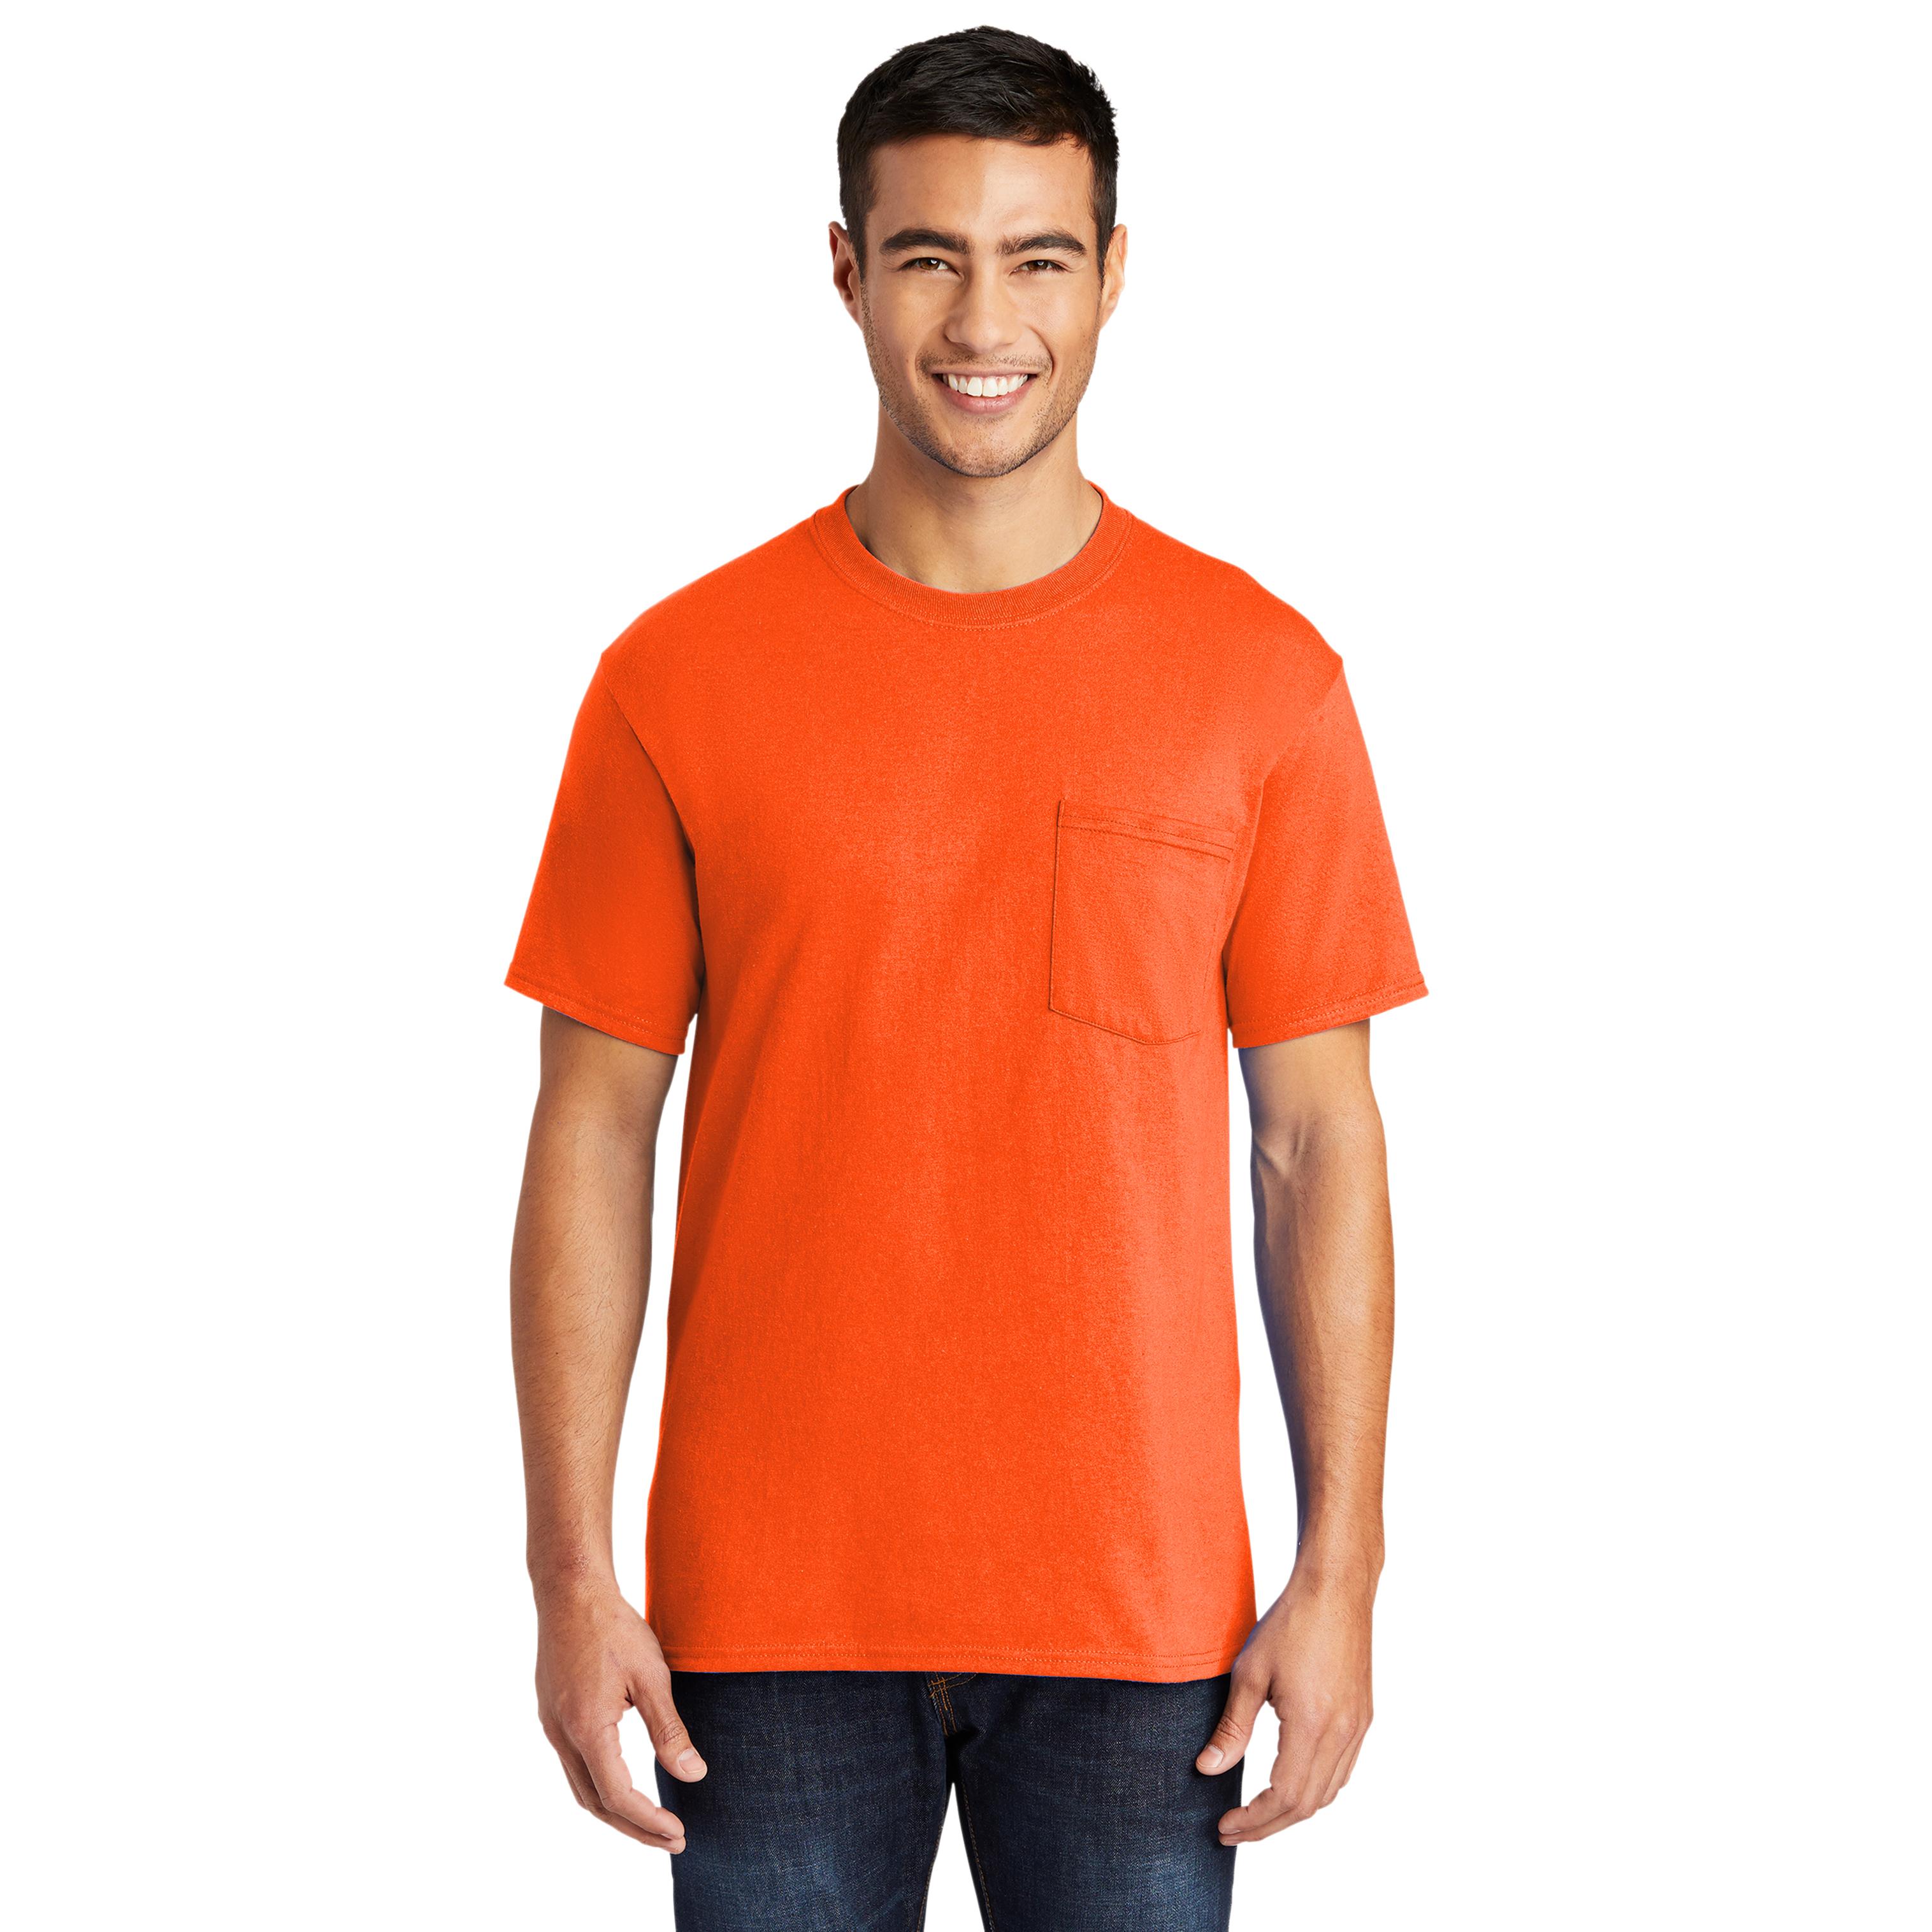 Team Realtree mens T-shirt hunter Orange black logo safety short sleeve L Large 